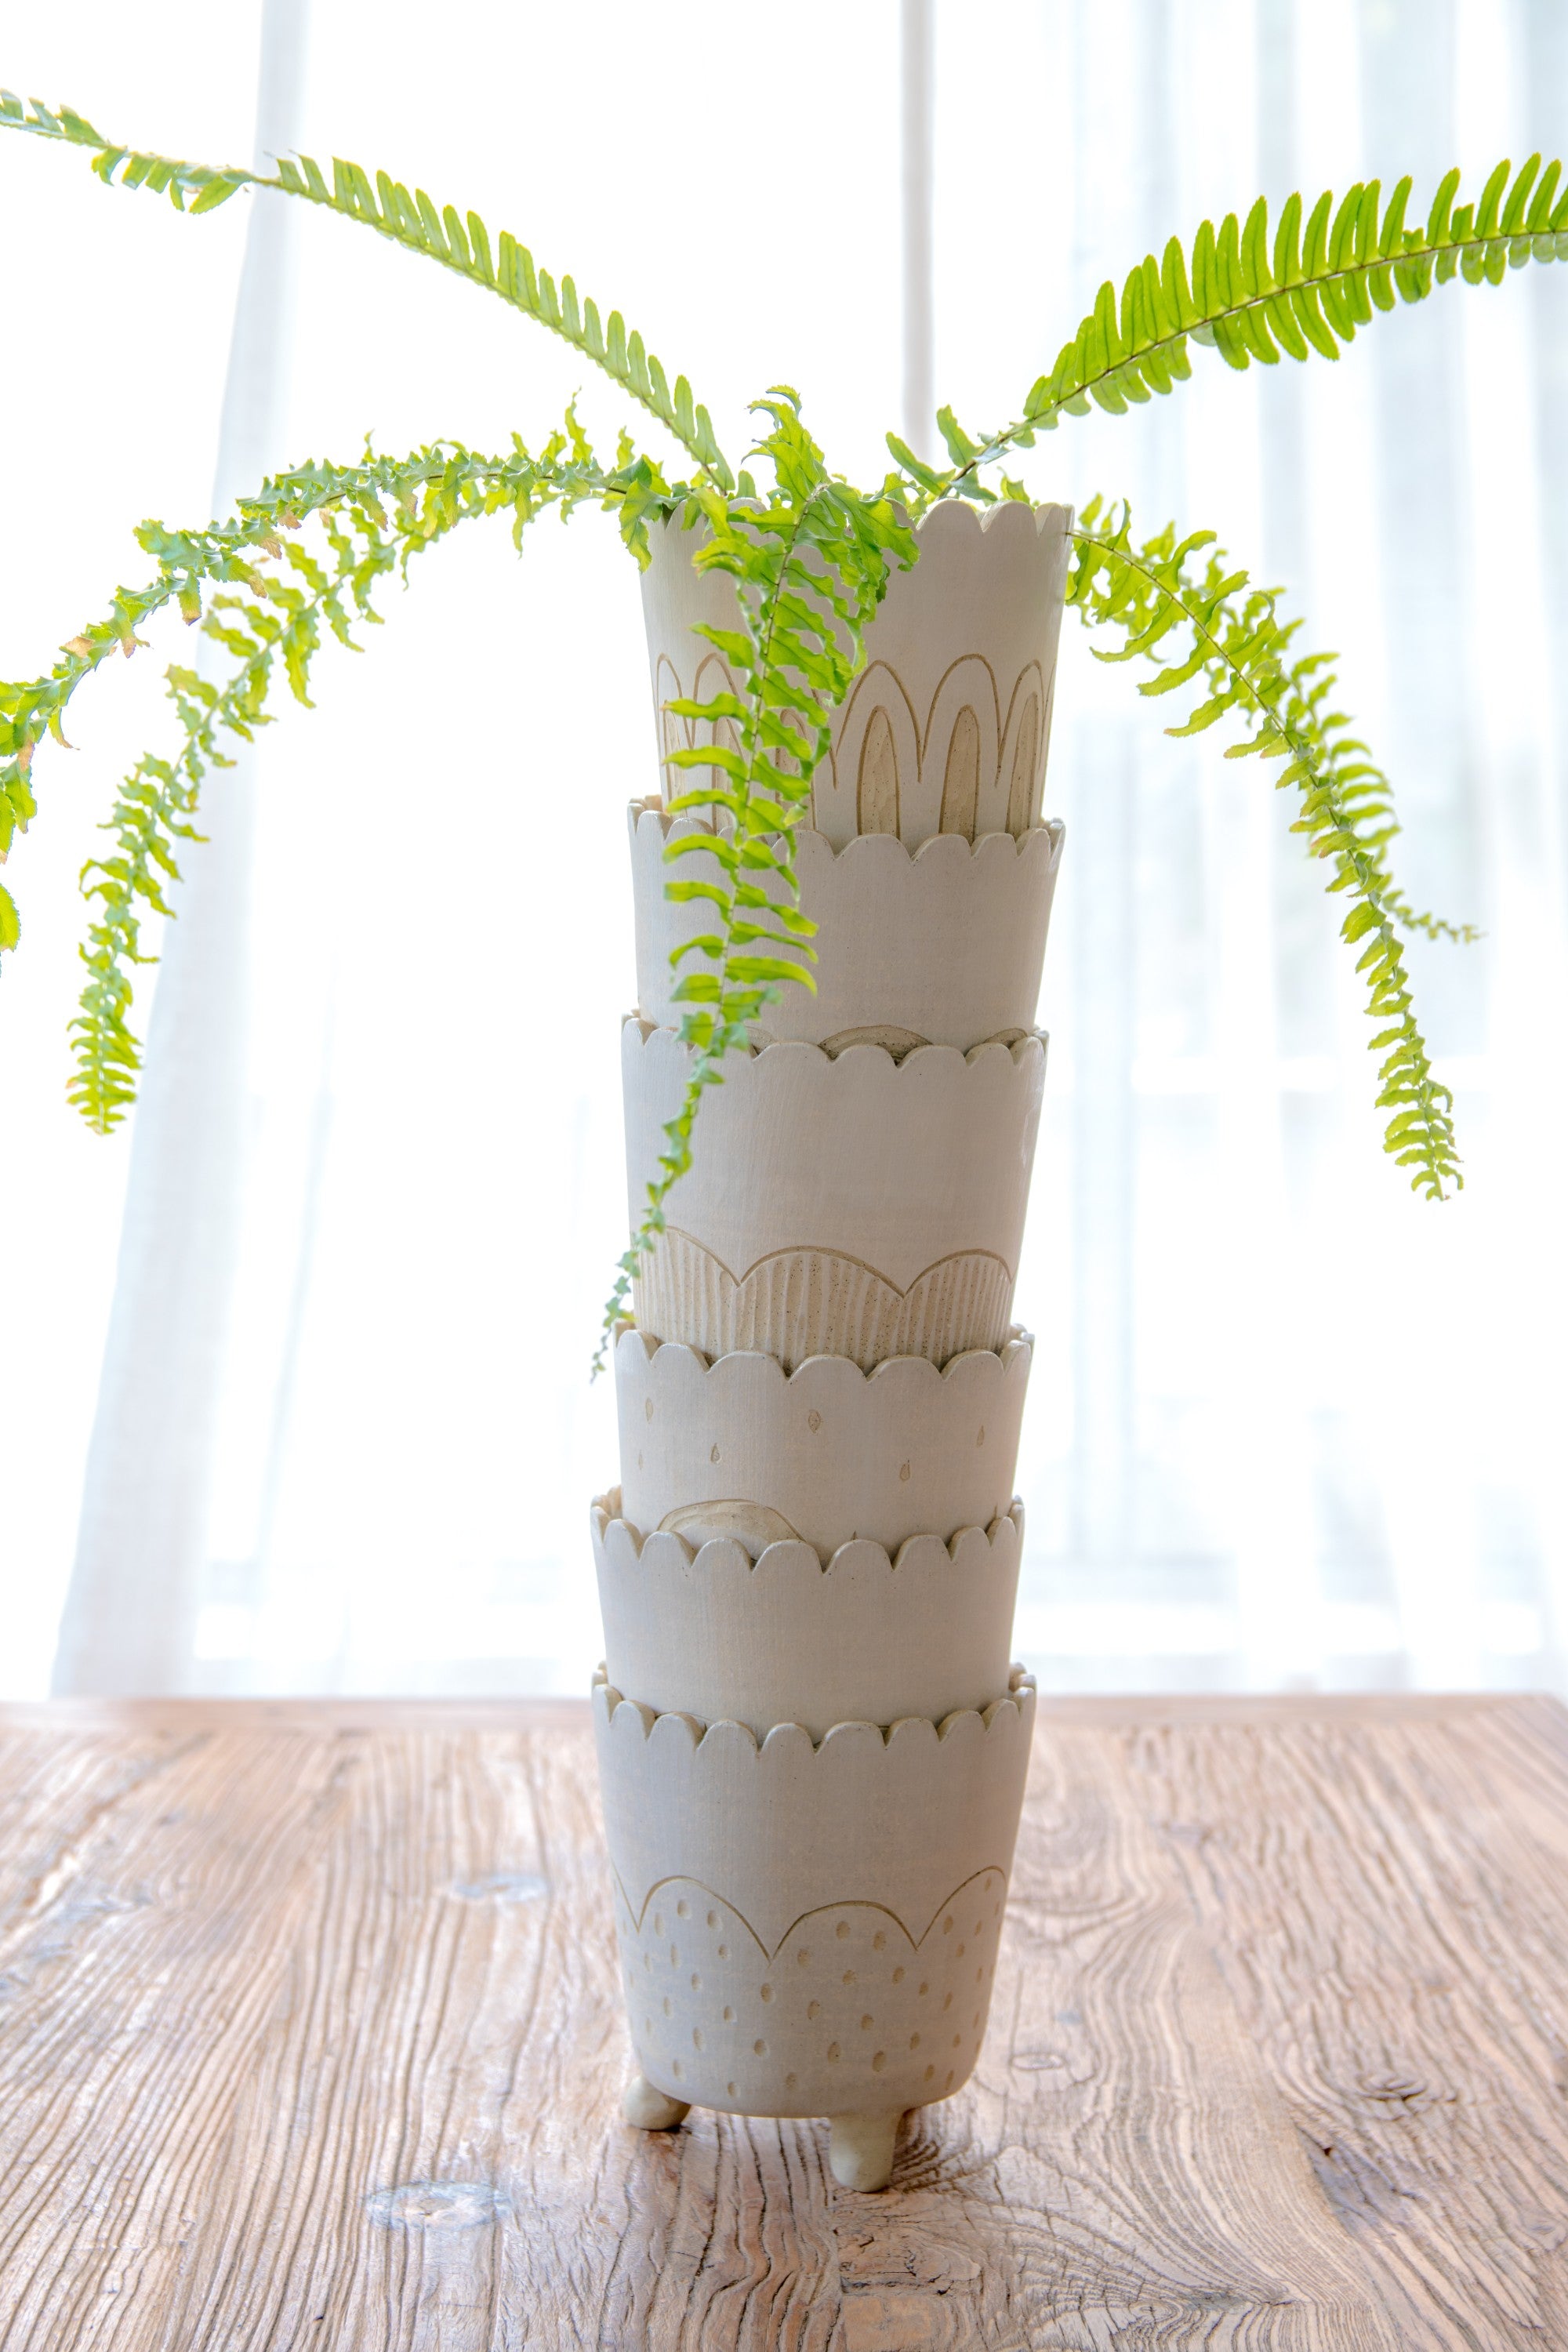 Mini stumpaloompa planter - SALE